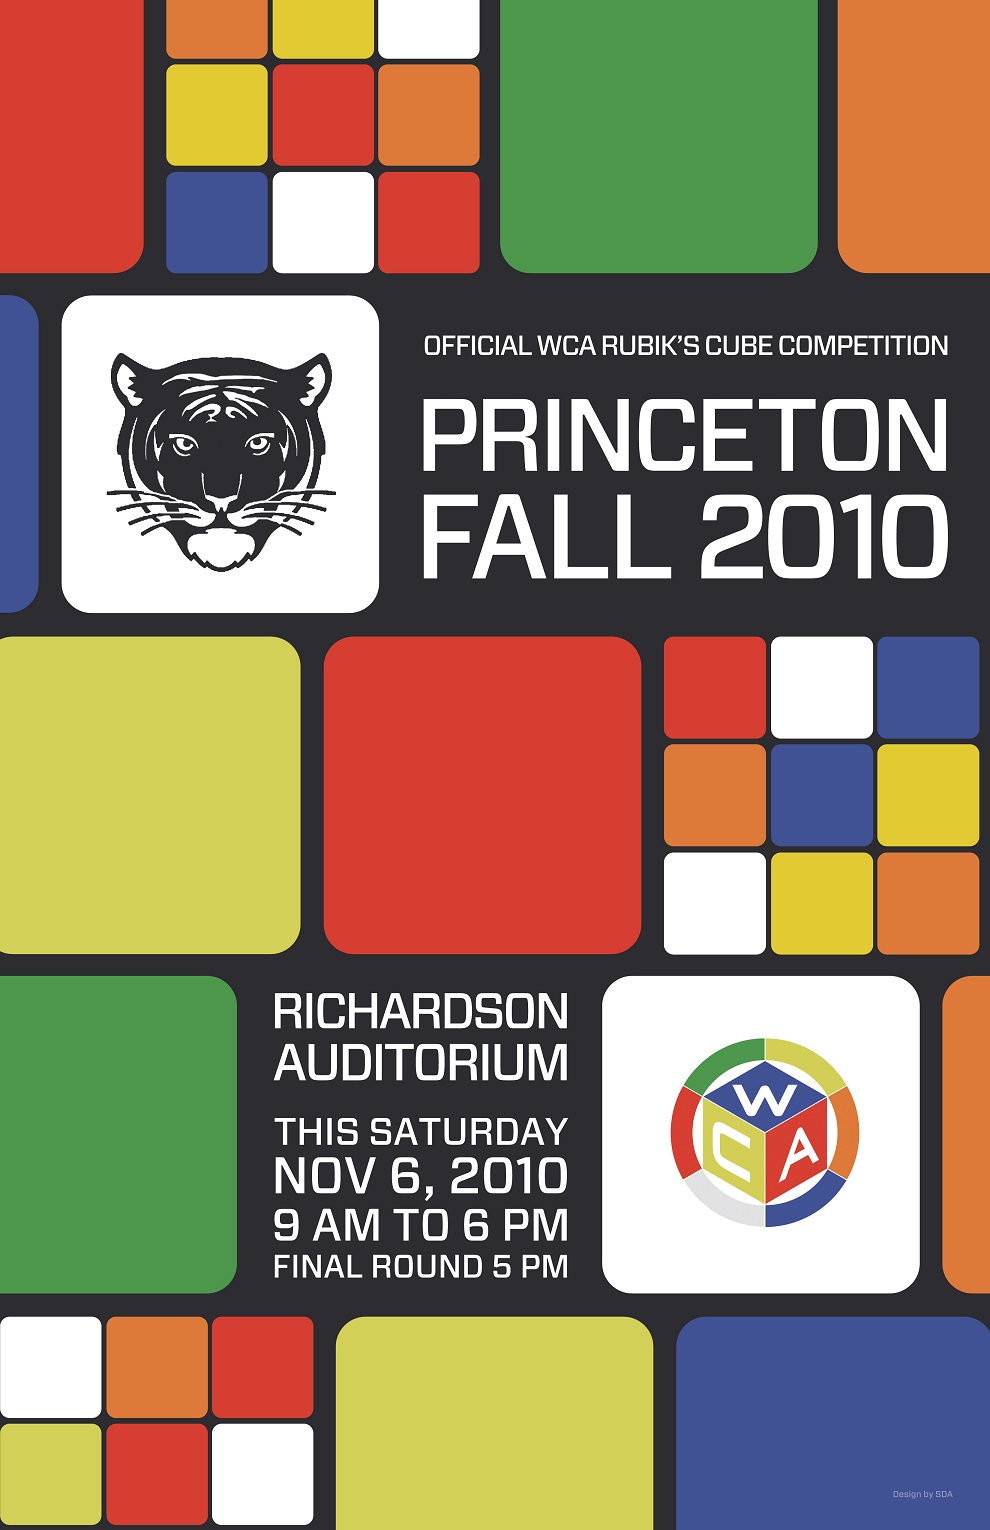 Princeton Cube Club